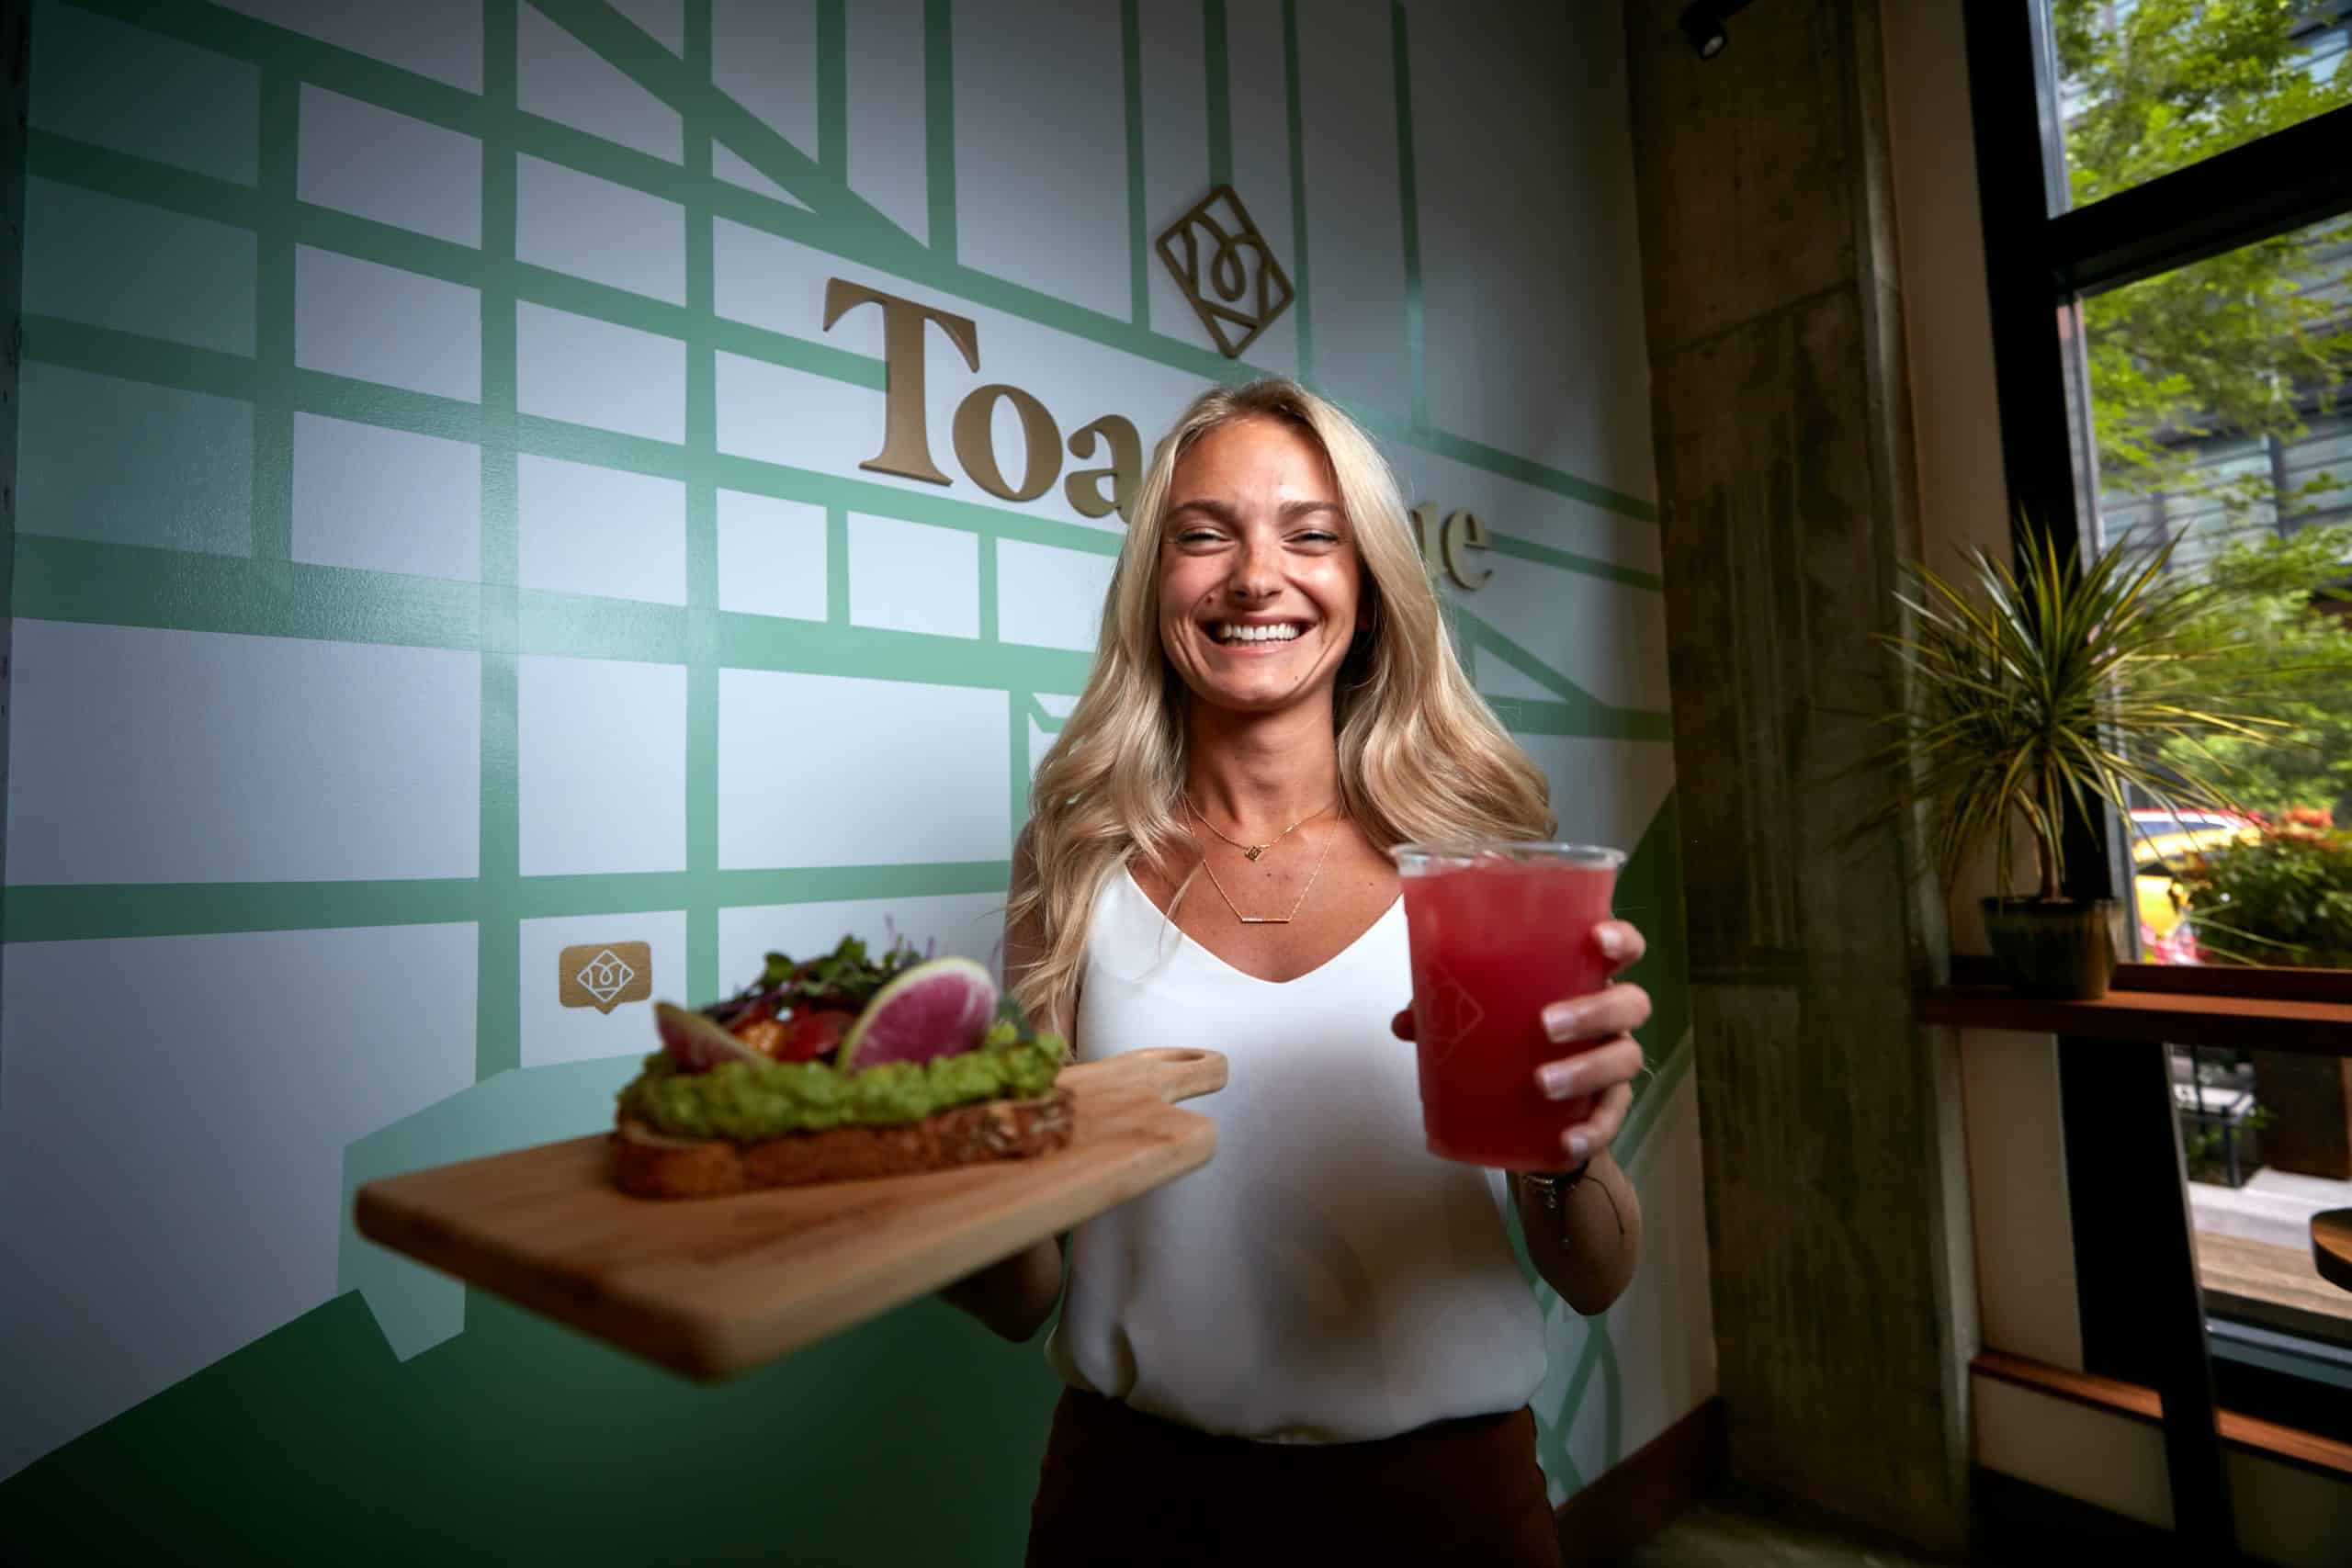 Toastique toast franchise Founder Brianna Keefe.